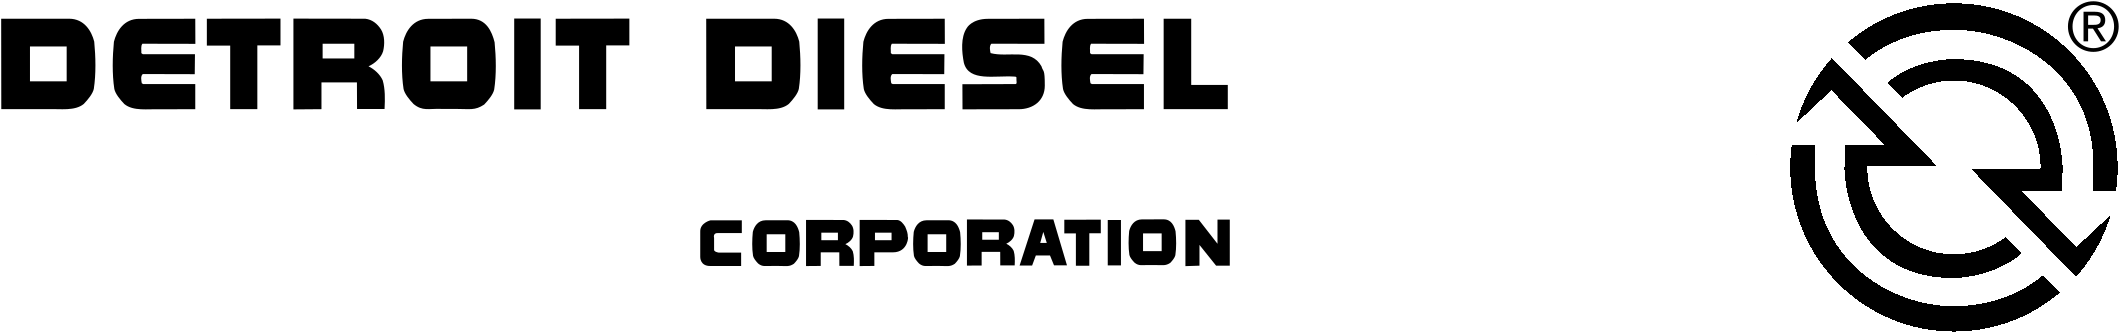 Detroit Diesel Corporation Logo Black And White - Detroit Diesel Clipart (2400x2400), Png Download